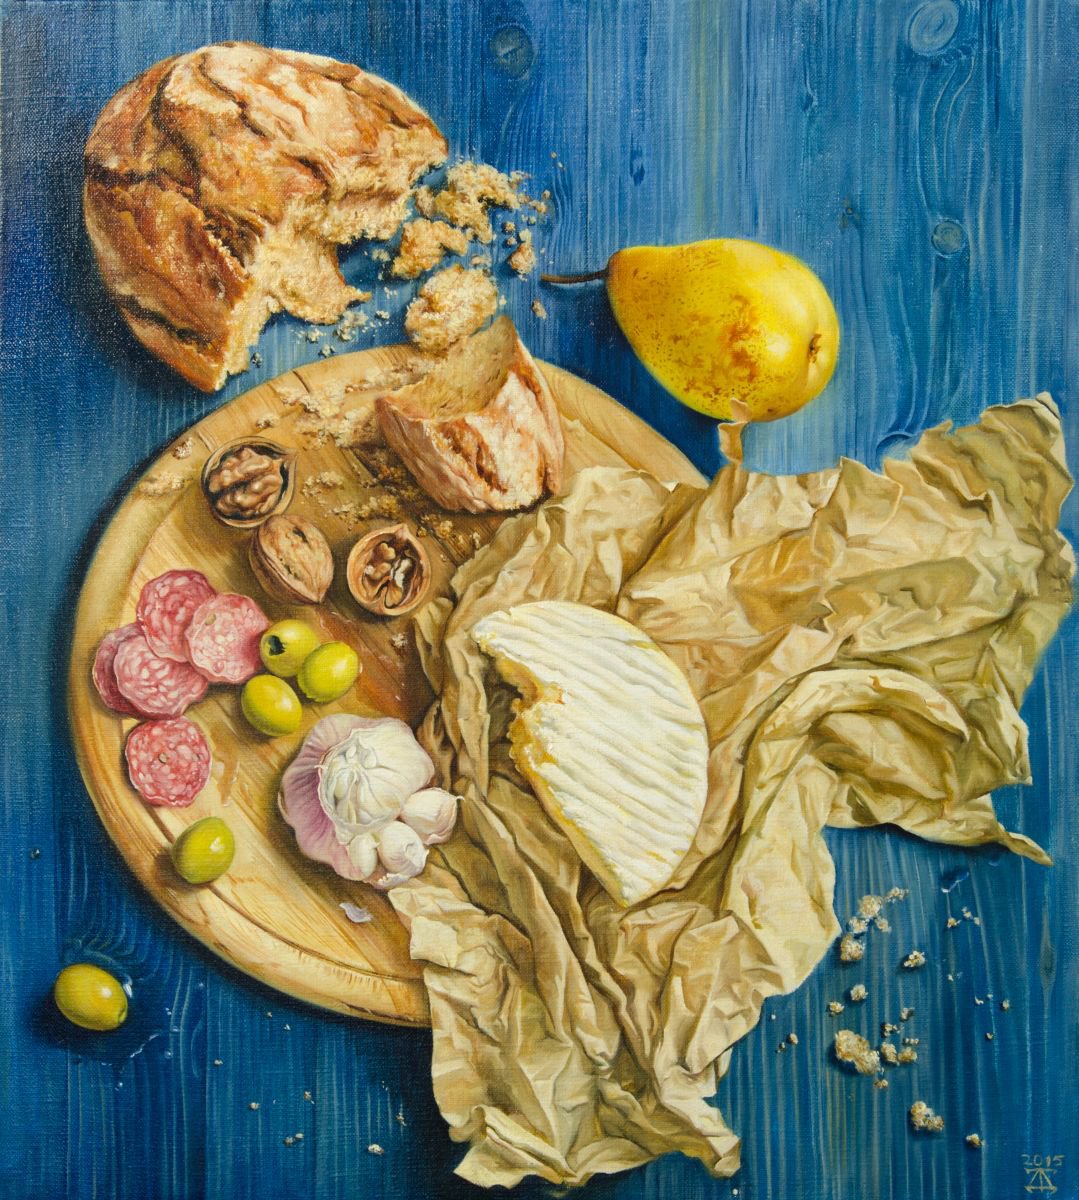 Still life with cheese and garlic by Daria Galinski